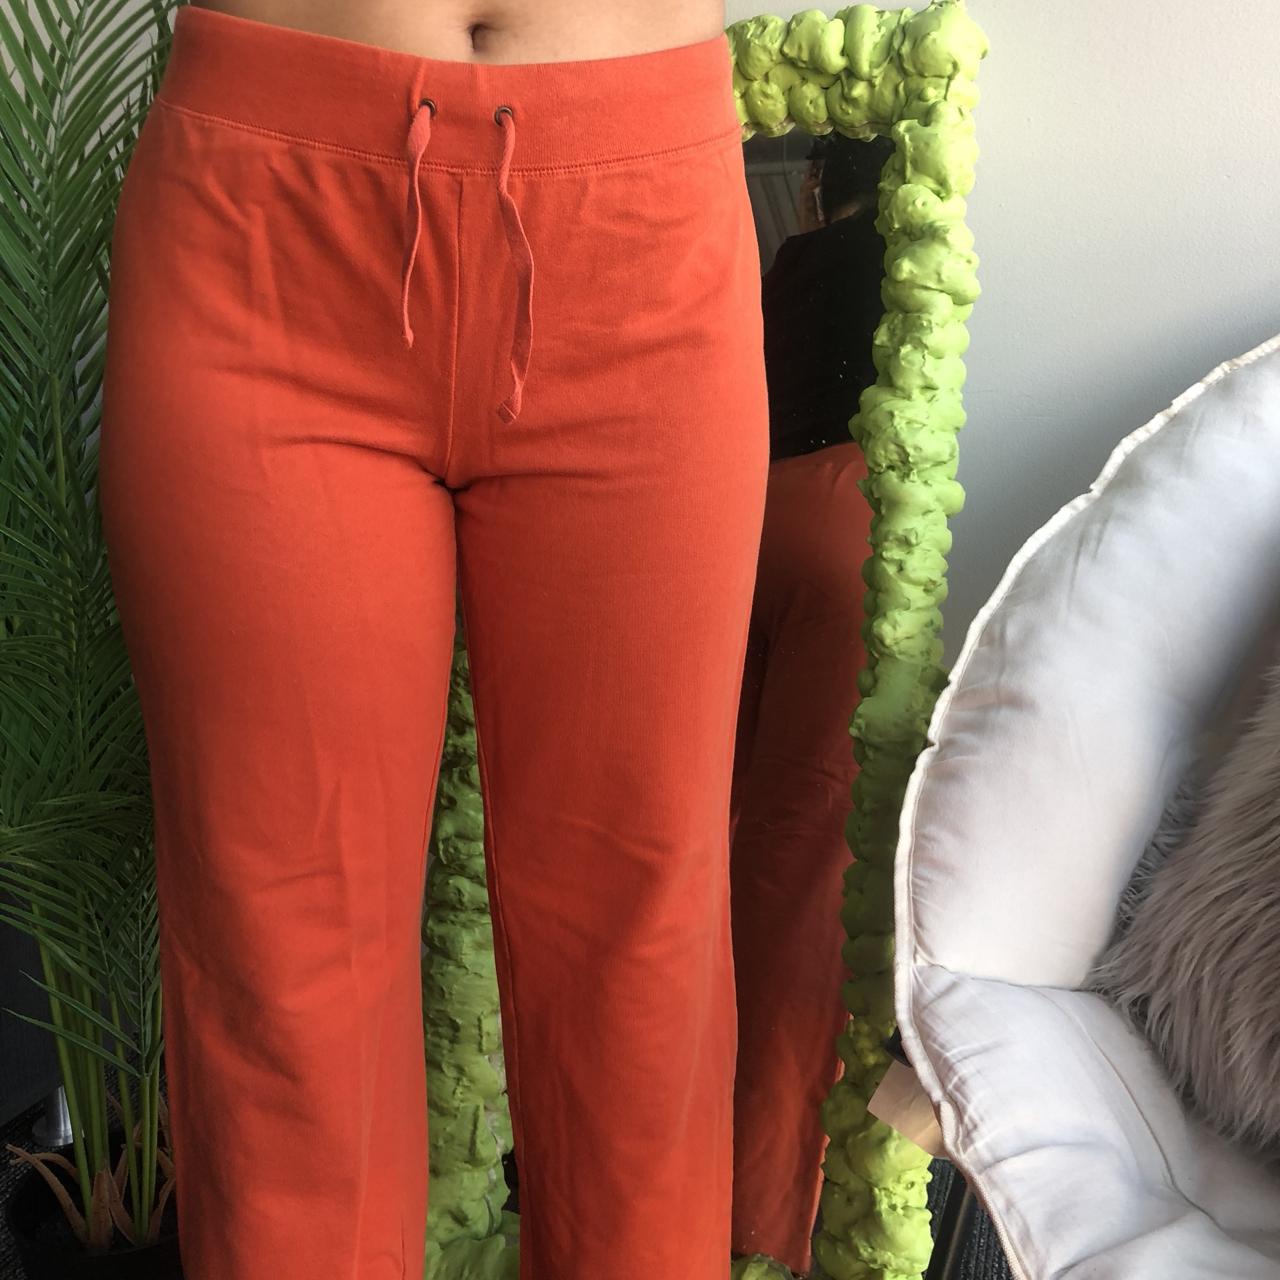 Burnt Orange Lounge Pants